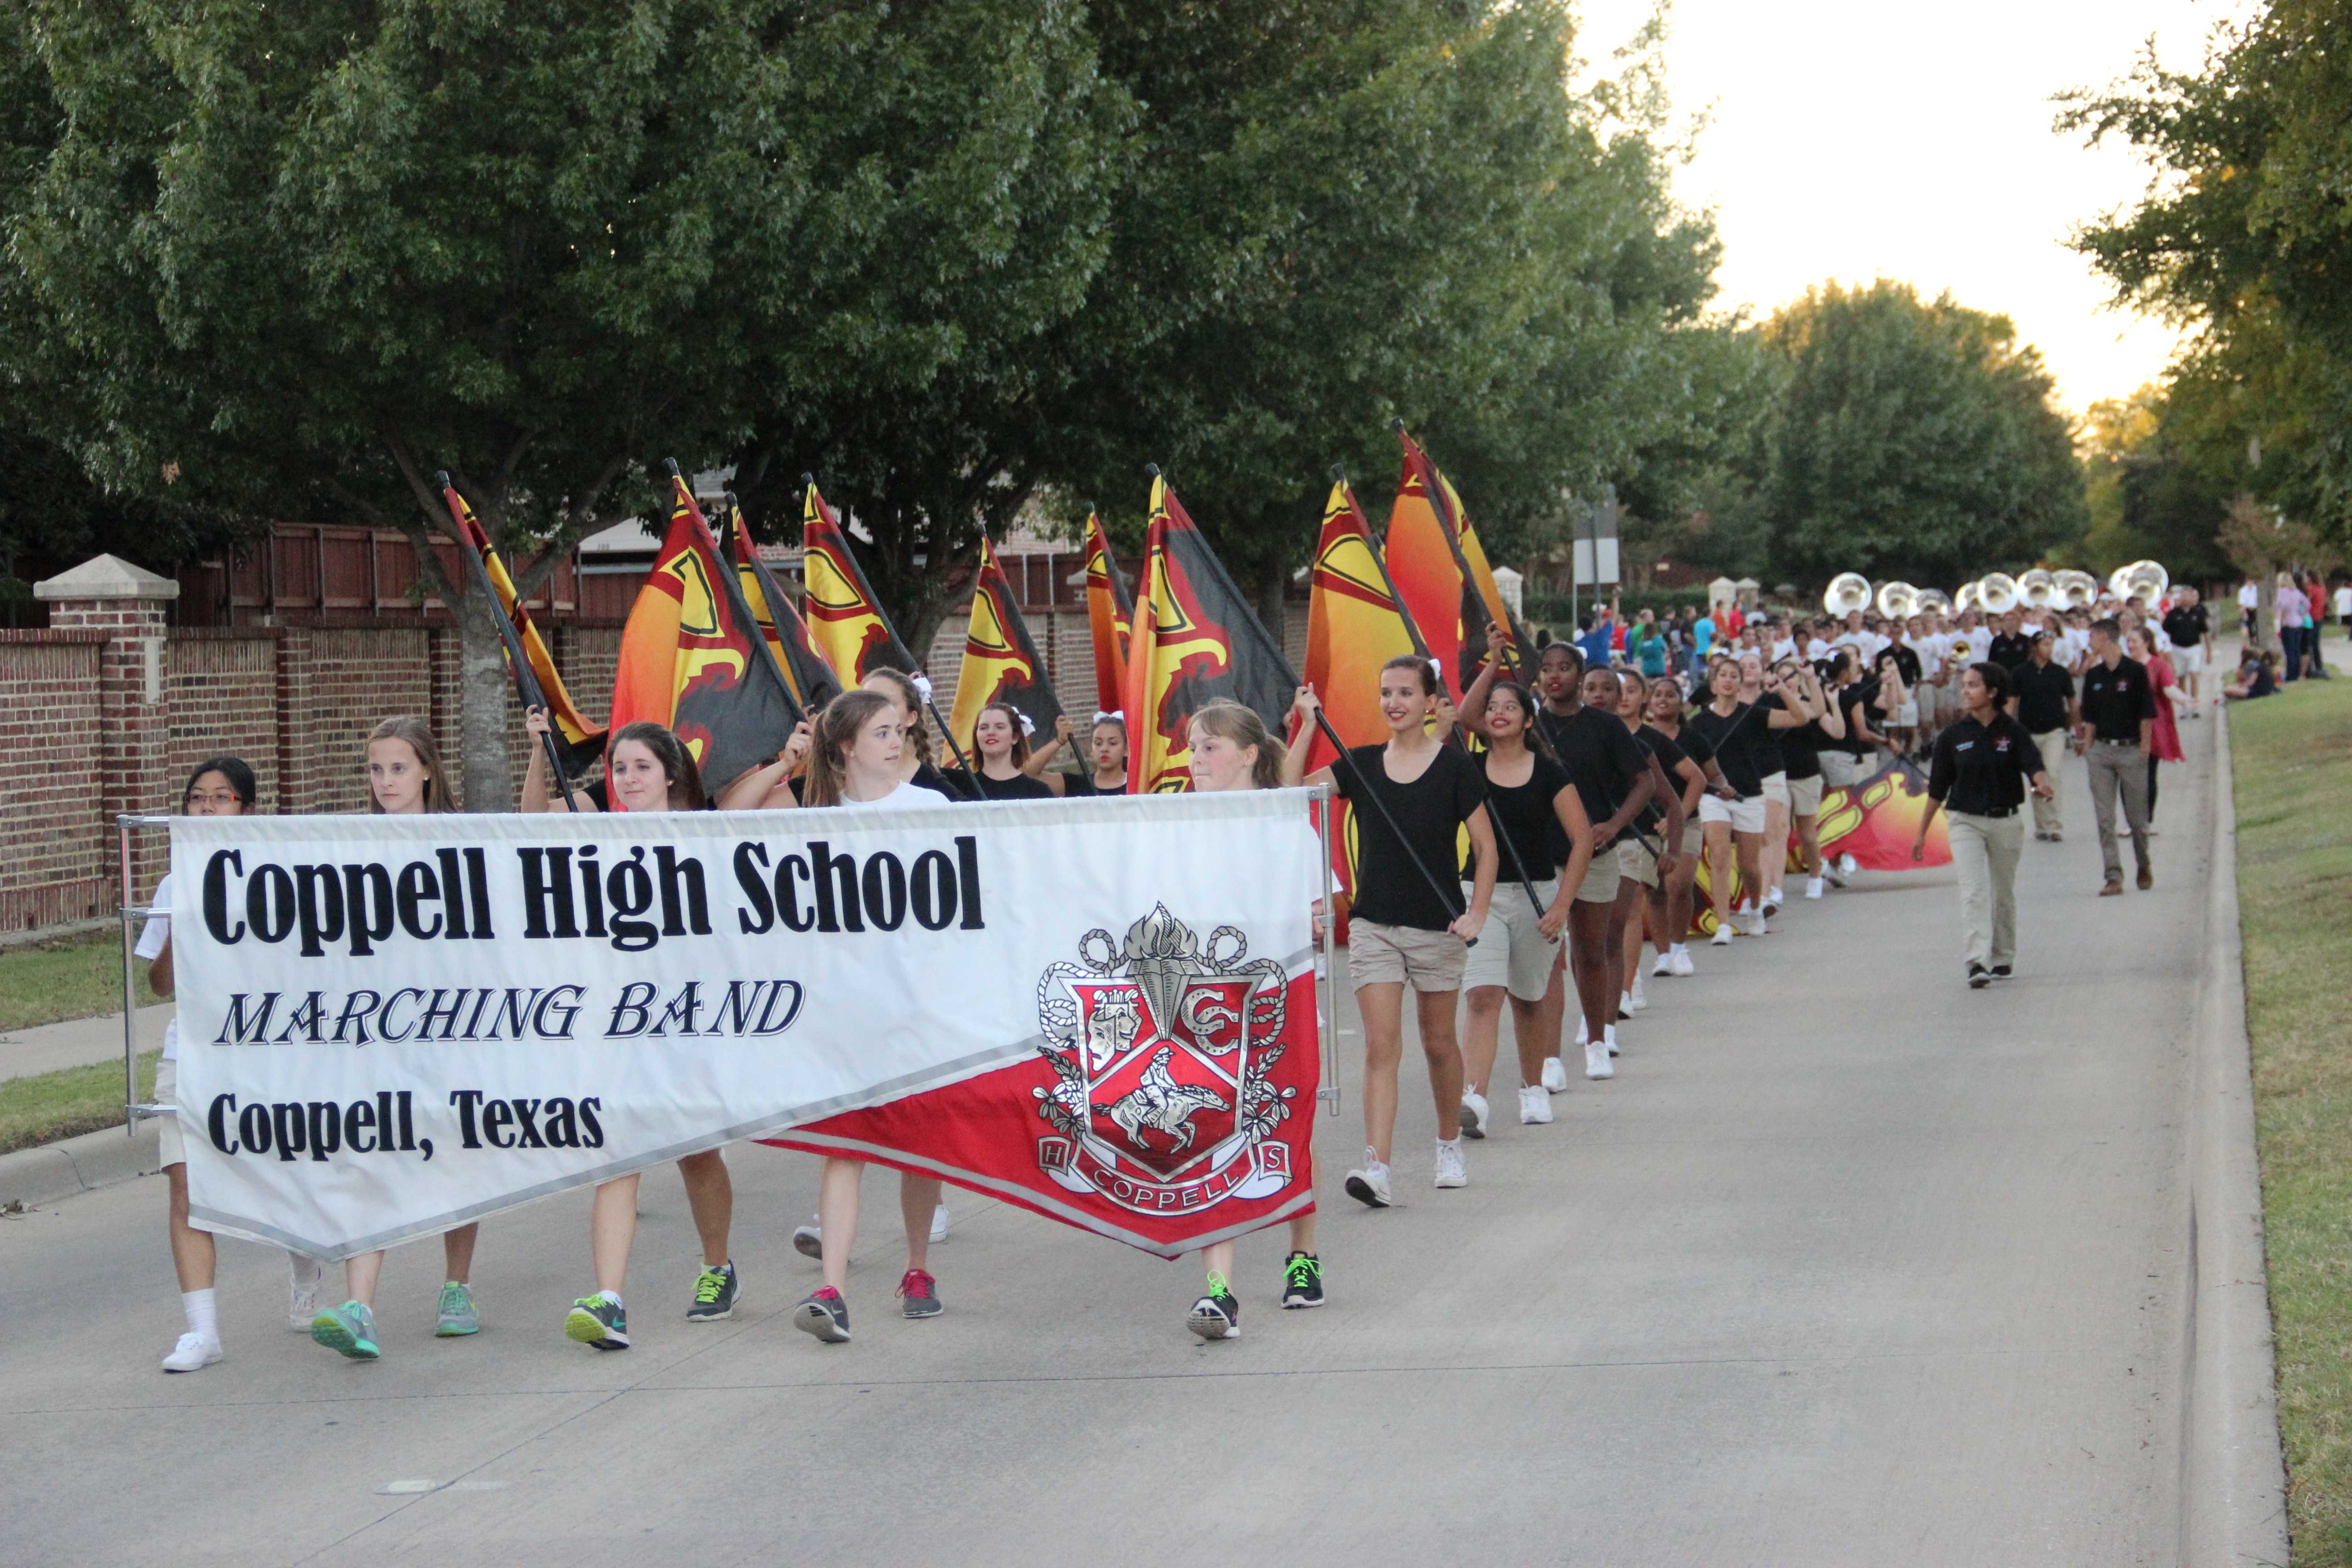 parade enhances community ties, school spirit Coppell